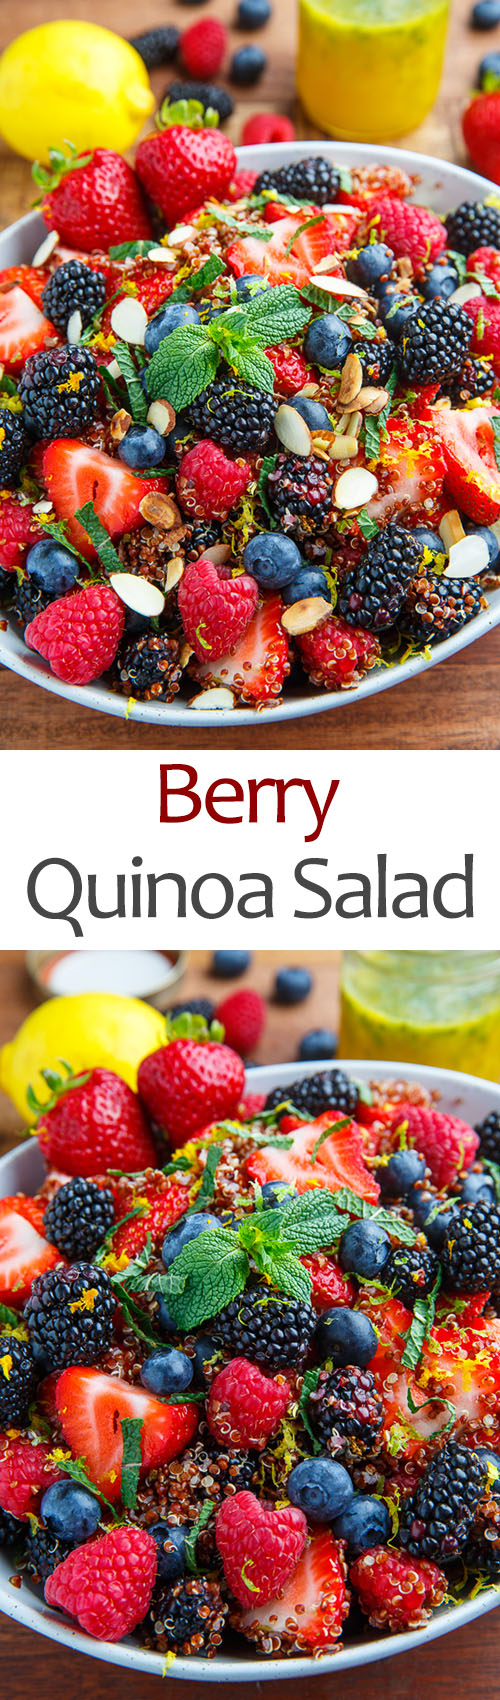 Berry Quinoa Salad